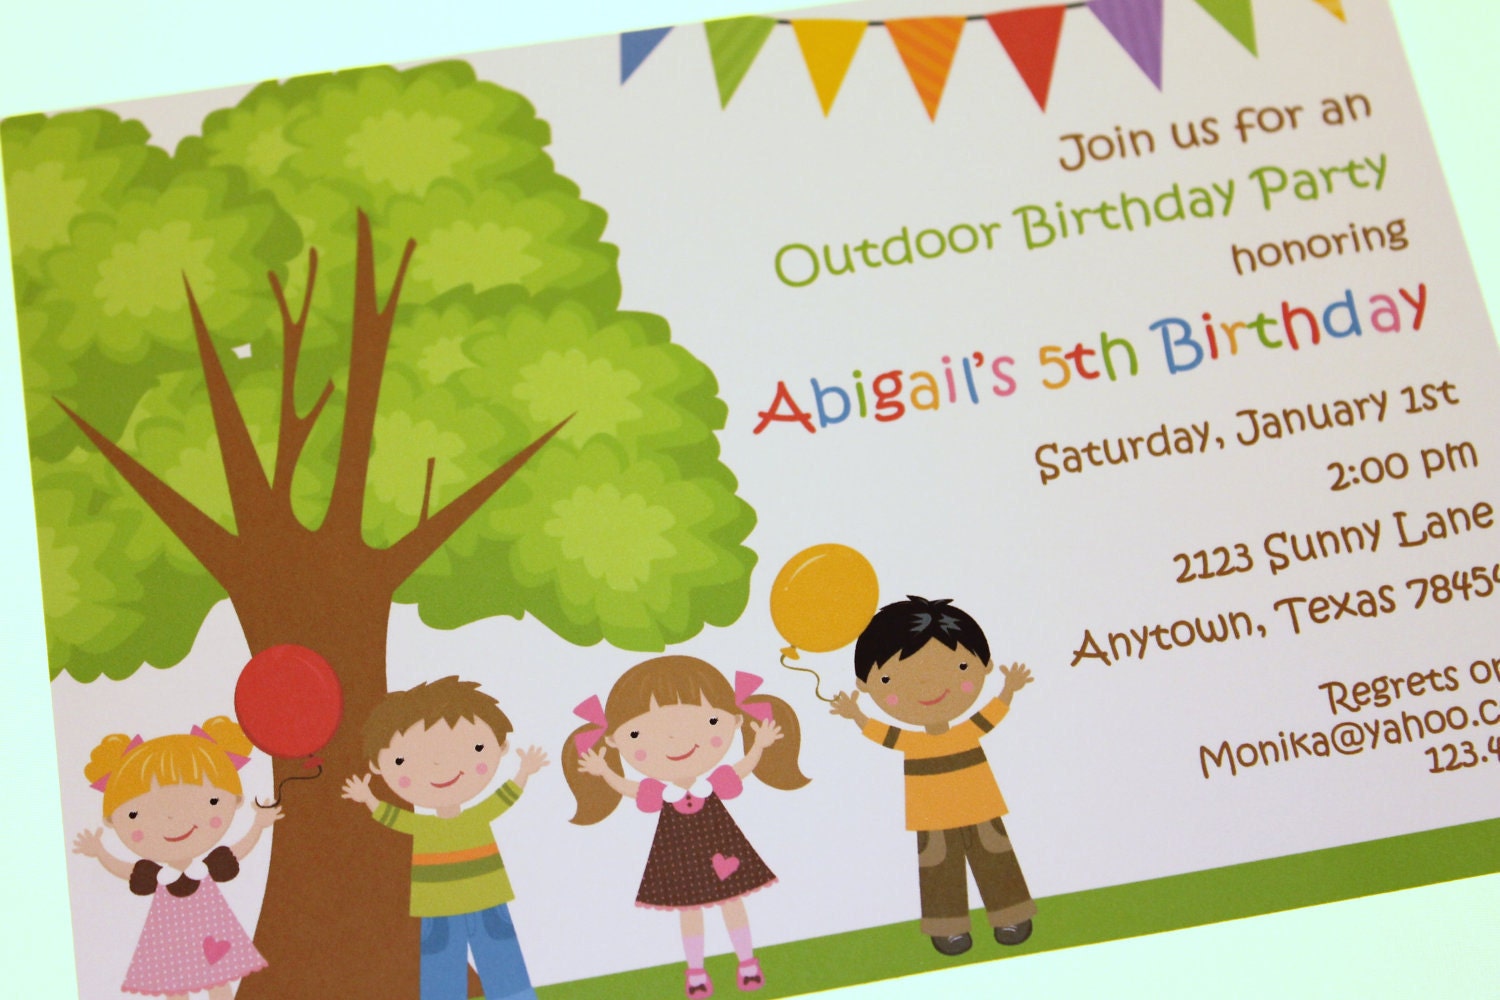 Outdoor Birthday Party Invitations